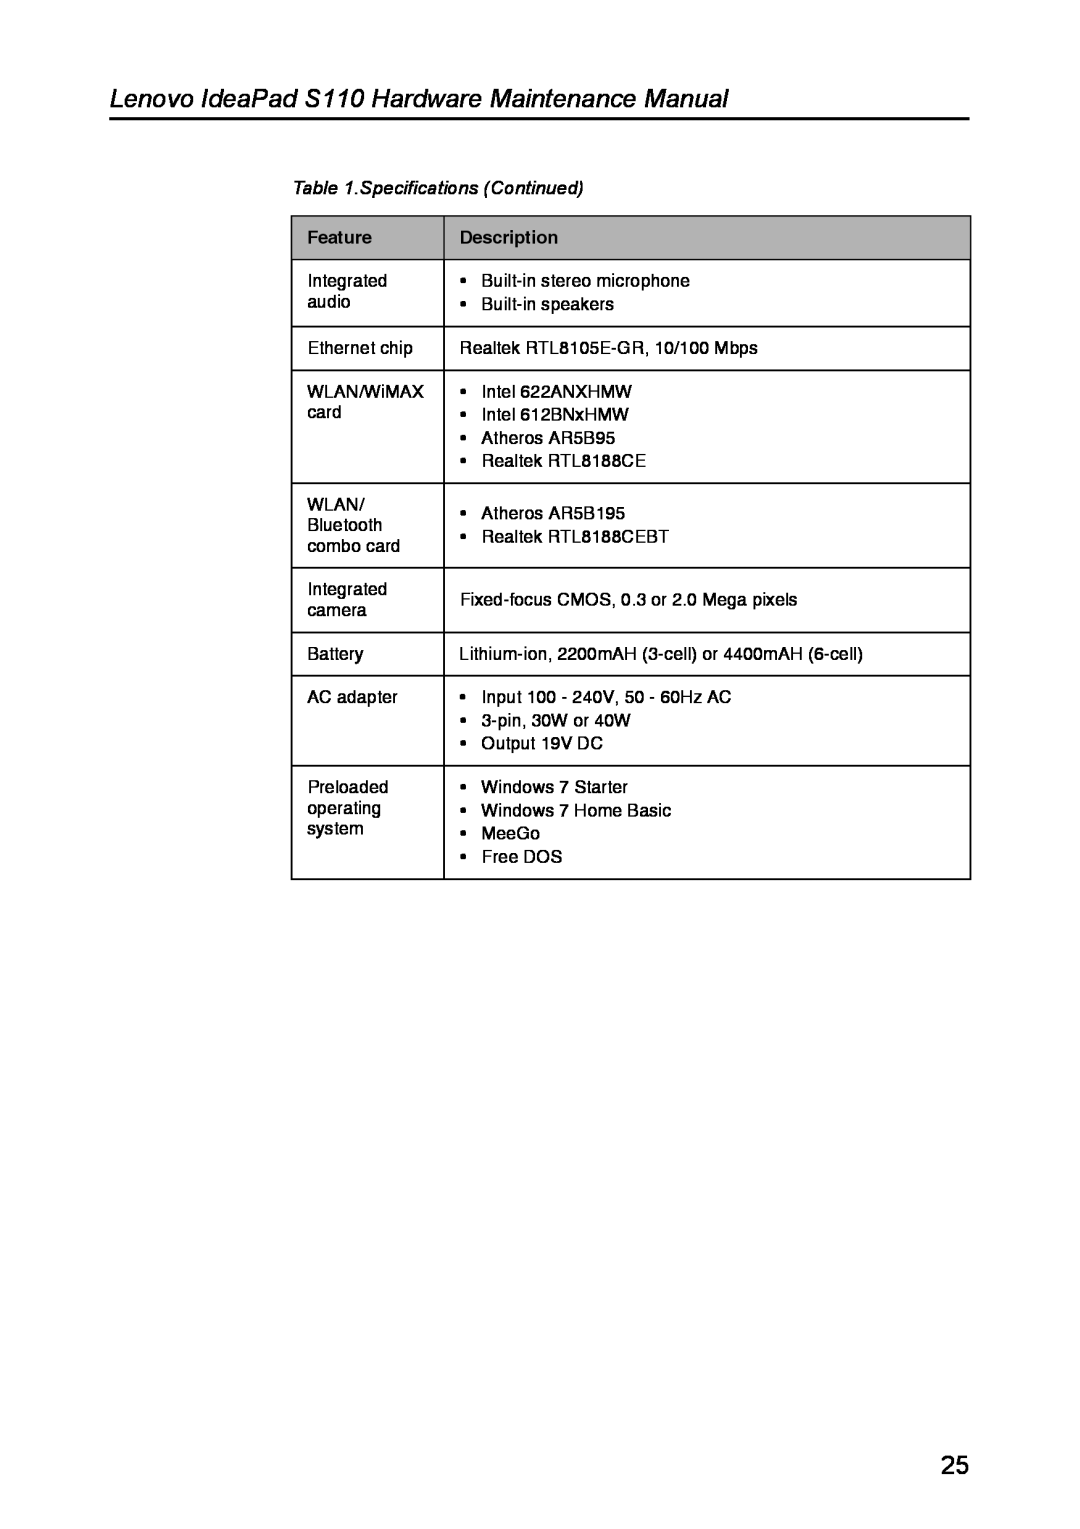 Lenovo manual Specifications Continued, Lenovo IdeaPad S110 Hardware Maintenance Manual, Feature, Description 